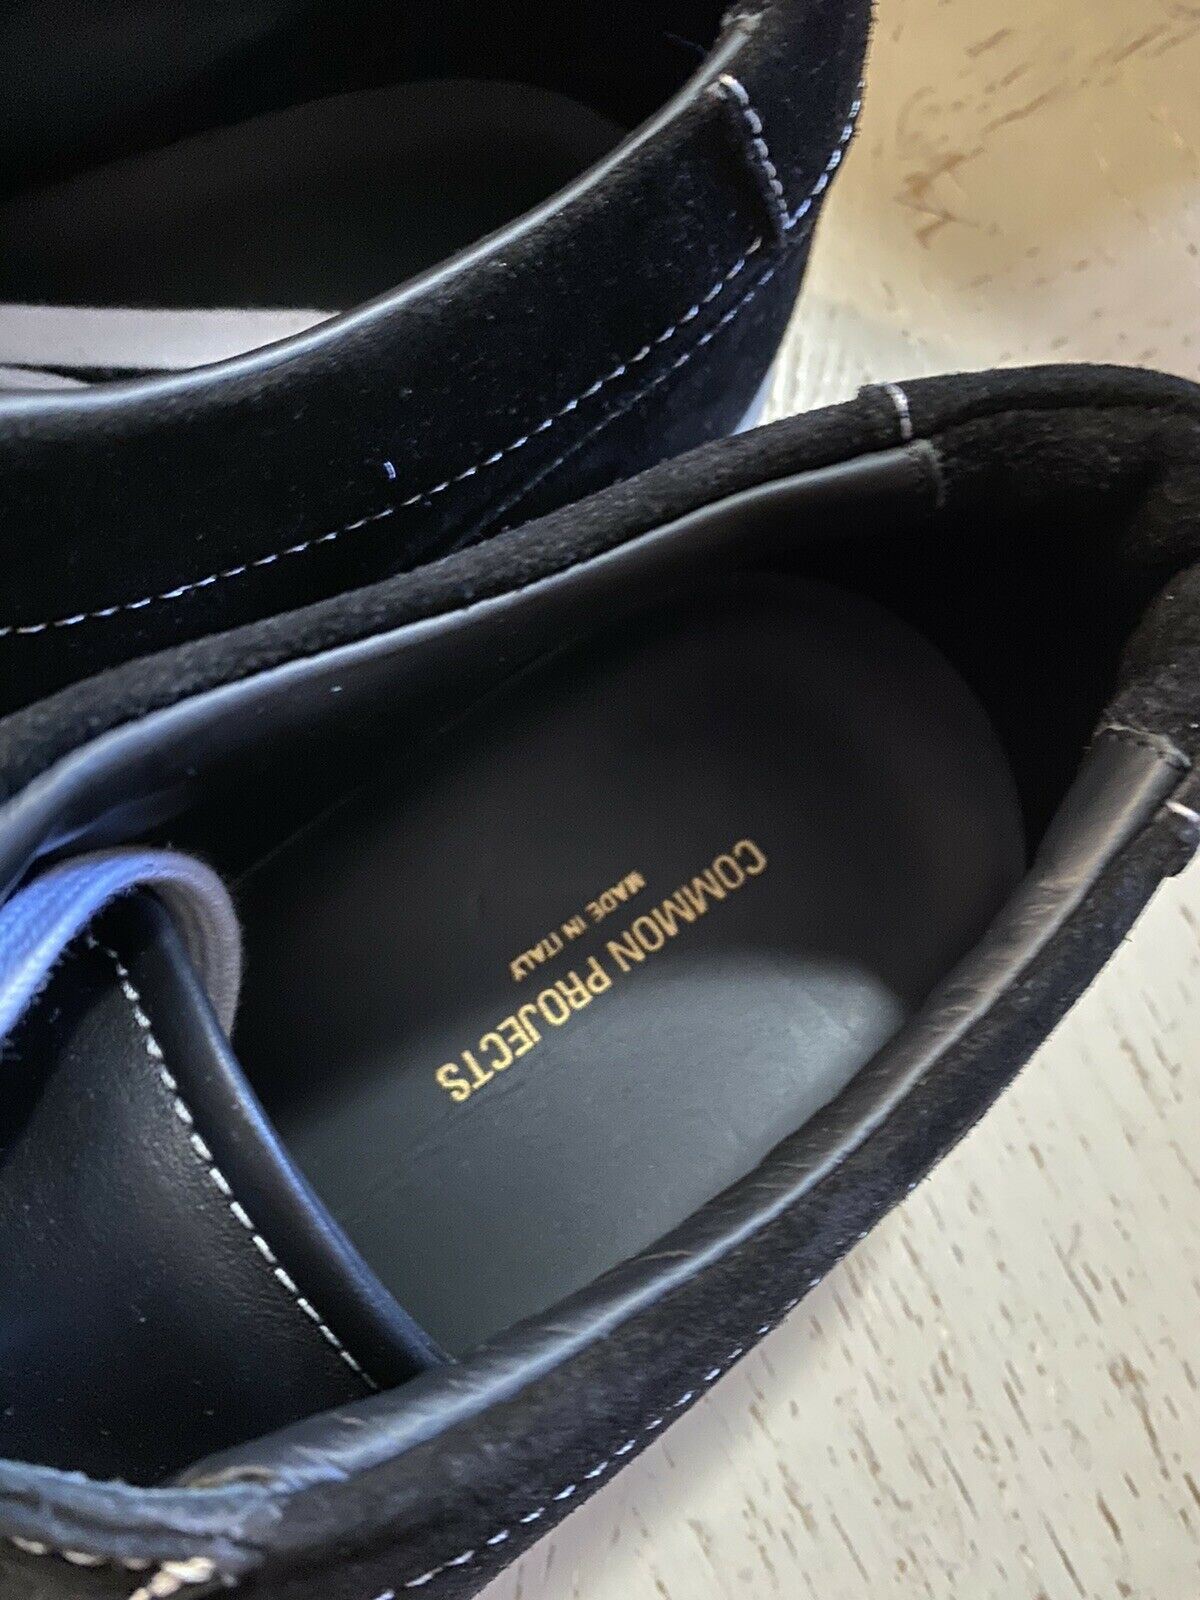 Neu $411 COMMON PROJECTS Herren Sneakers Schuhe Schwarz 13 US/46 Eu Italien